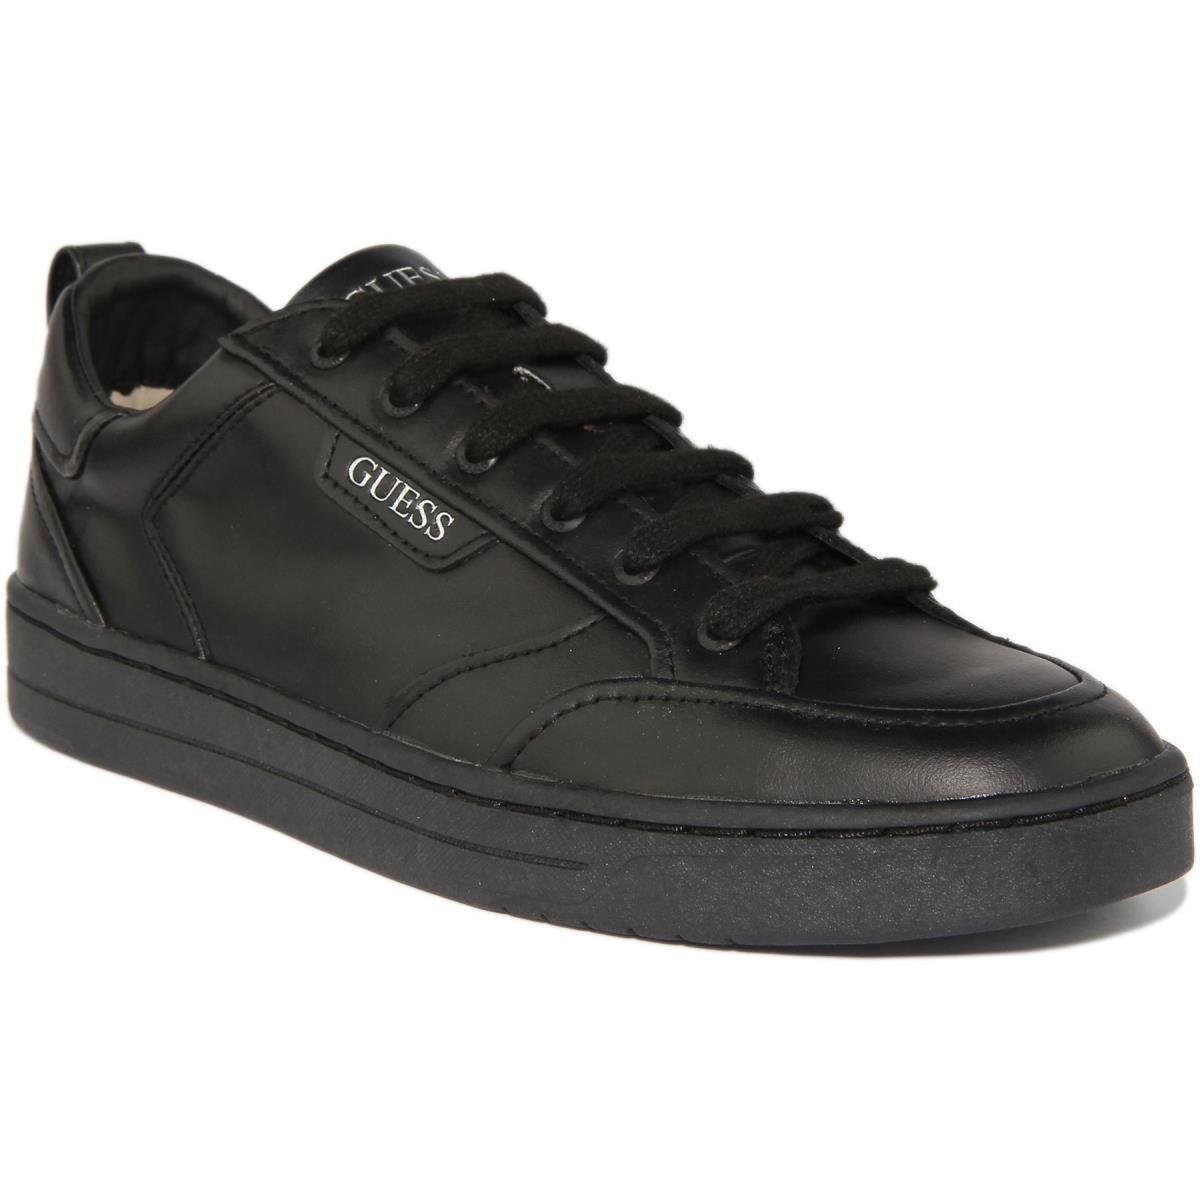 Guess Fm5Cerlea12 Certosa Mens Lace Up Low Sneakers In Black Size US 7 - 13 BLACK